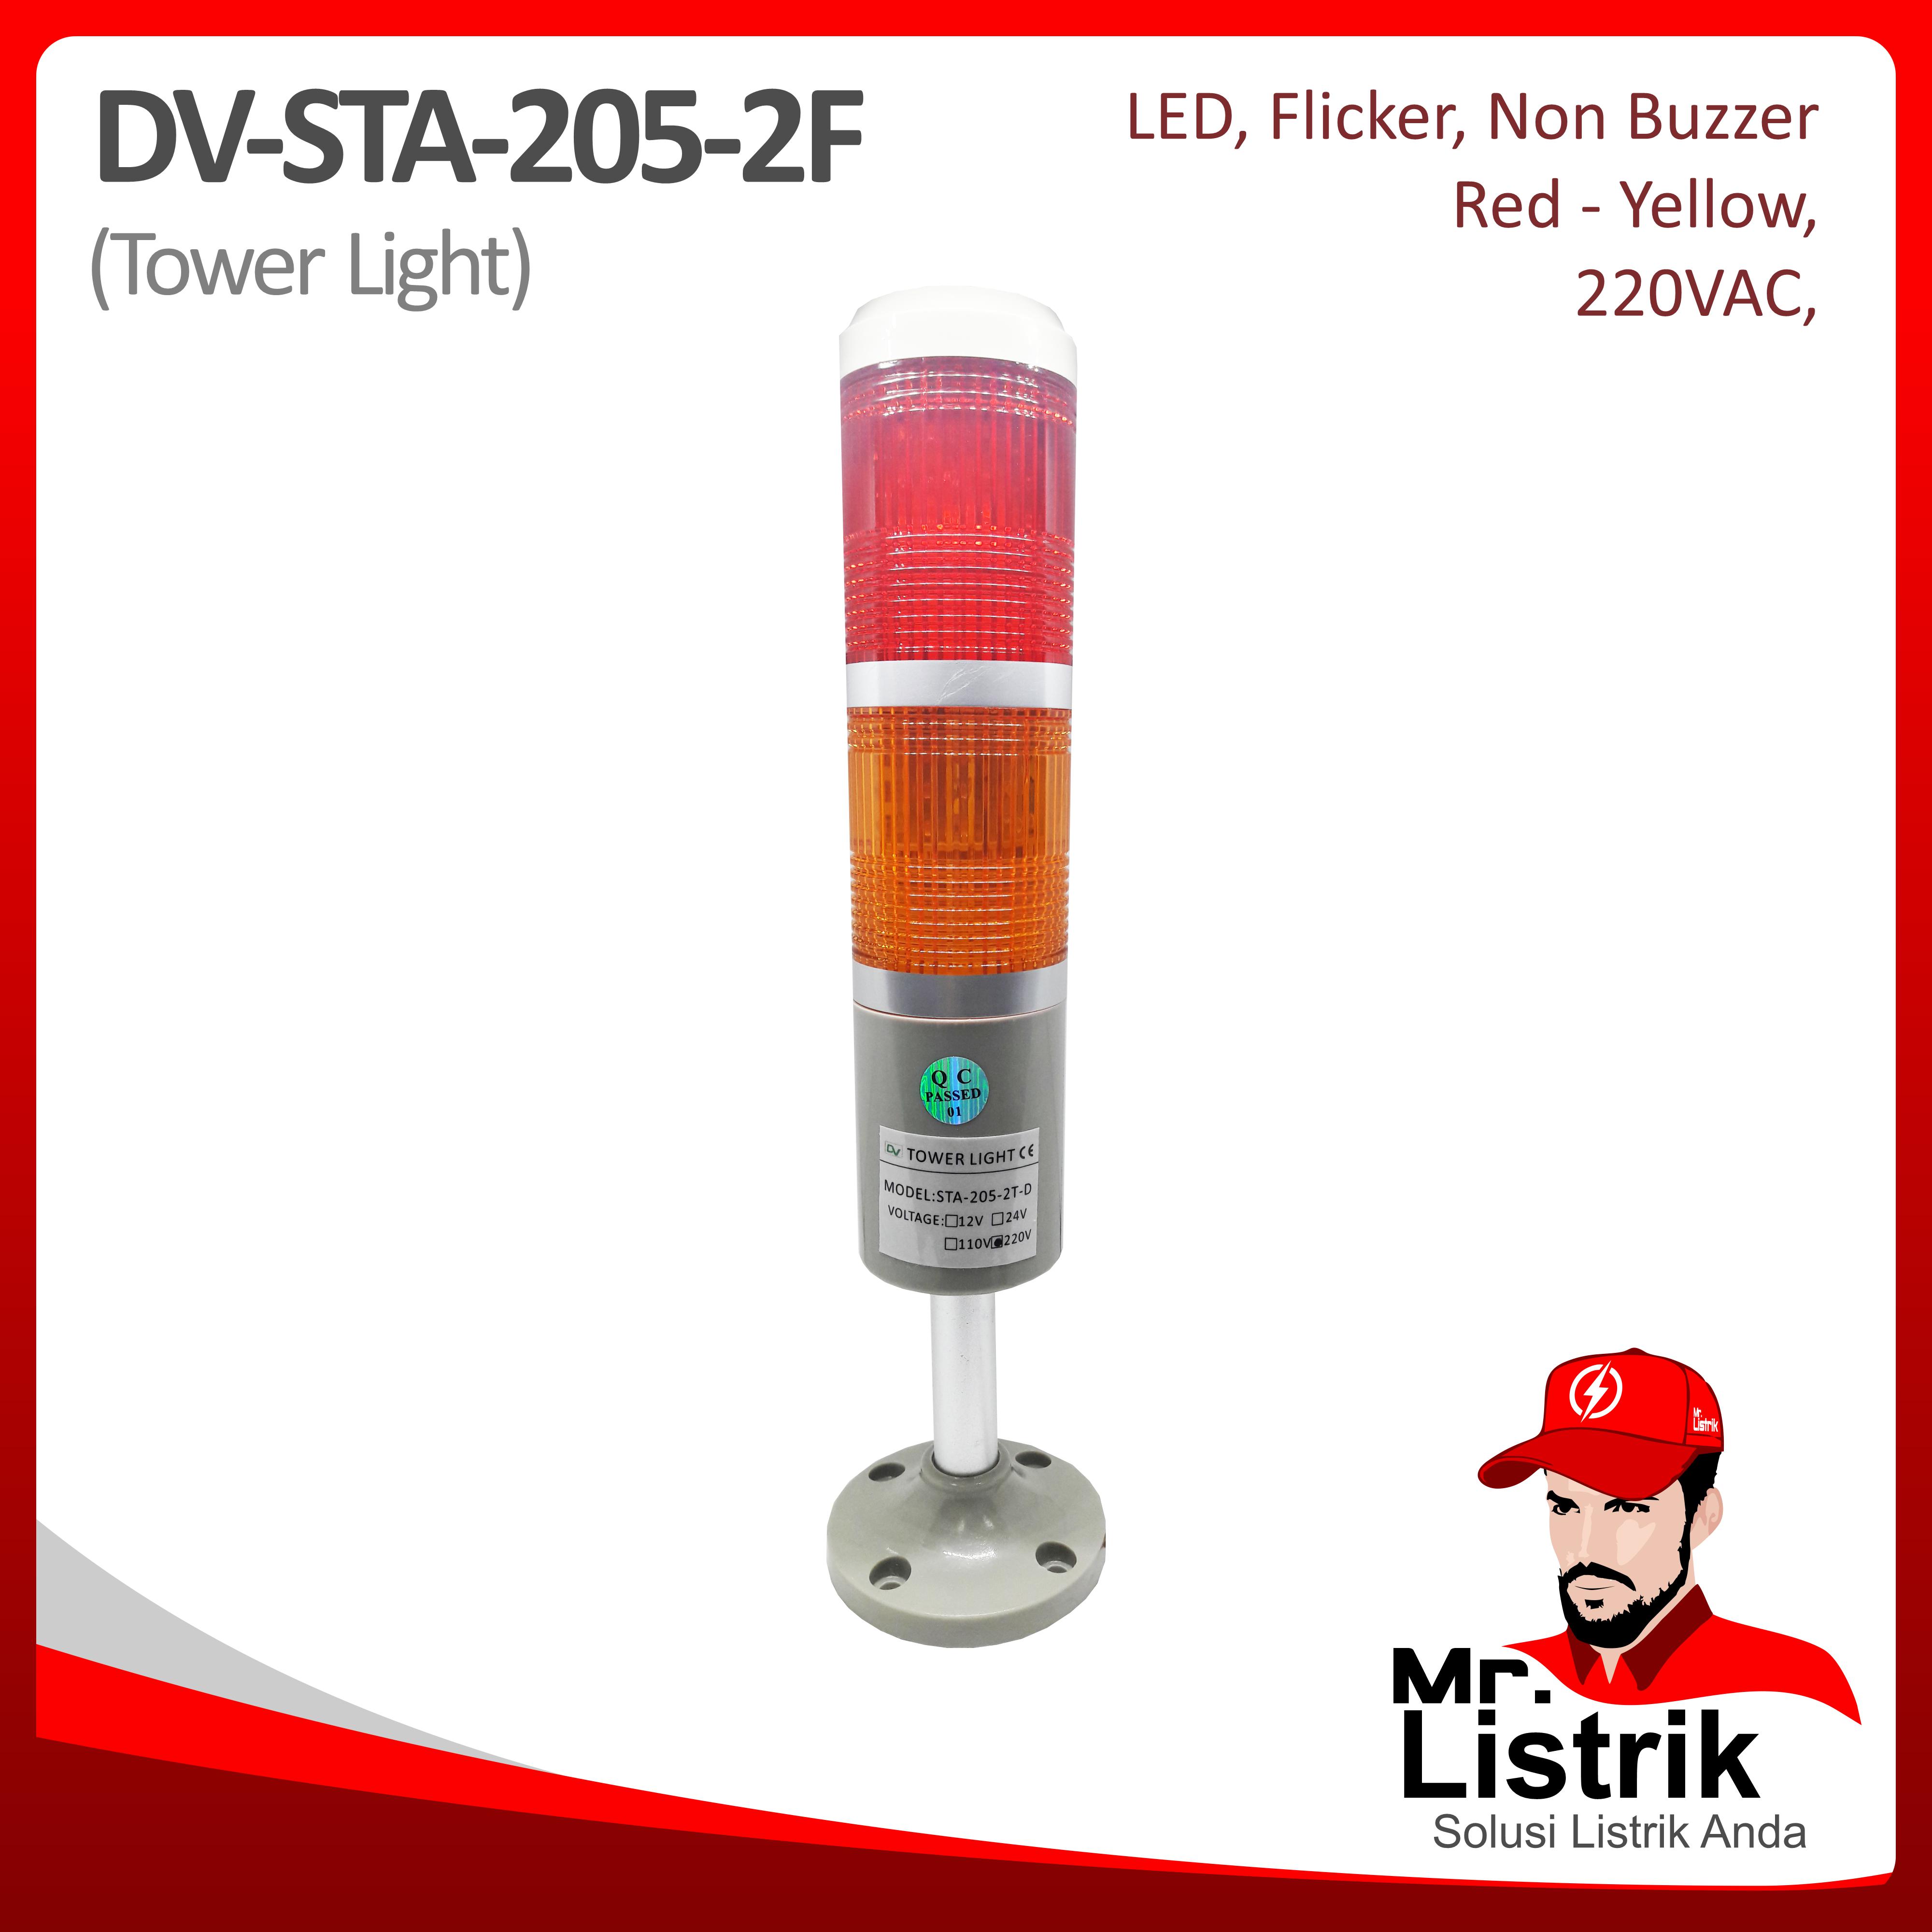 Tower Light LED Flicker Red+Yellow DV STA-205-2F